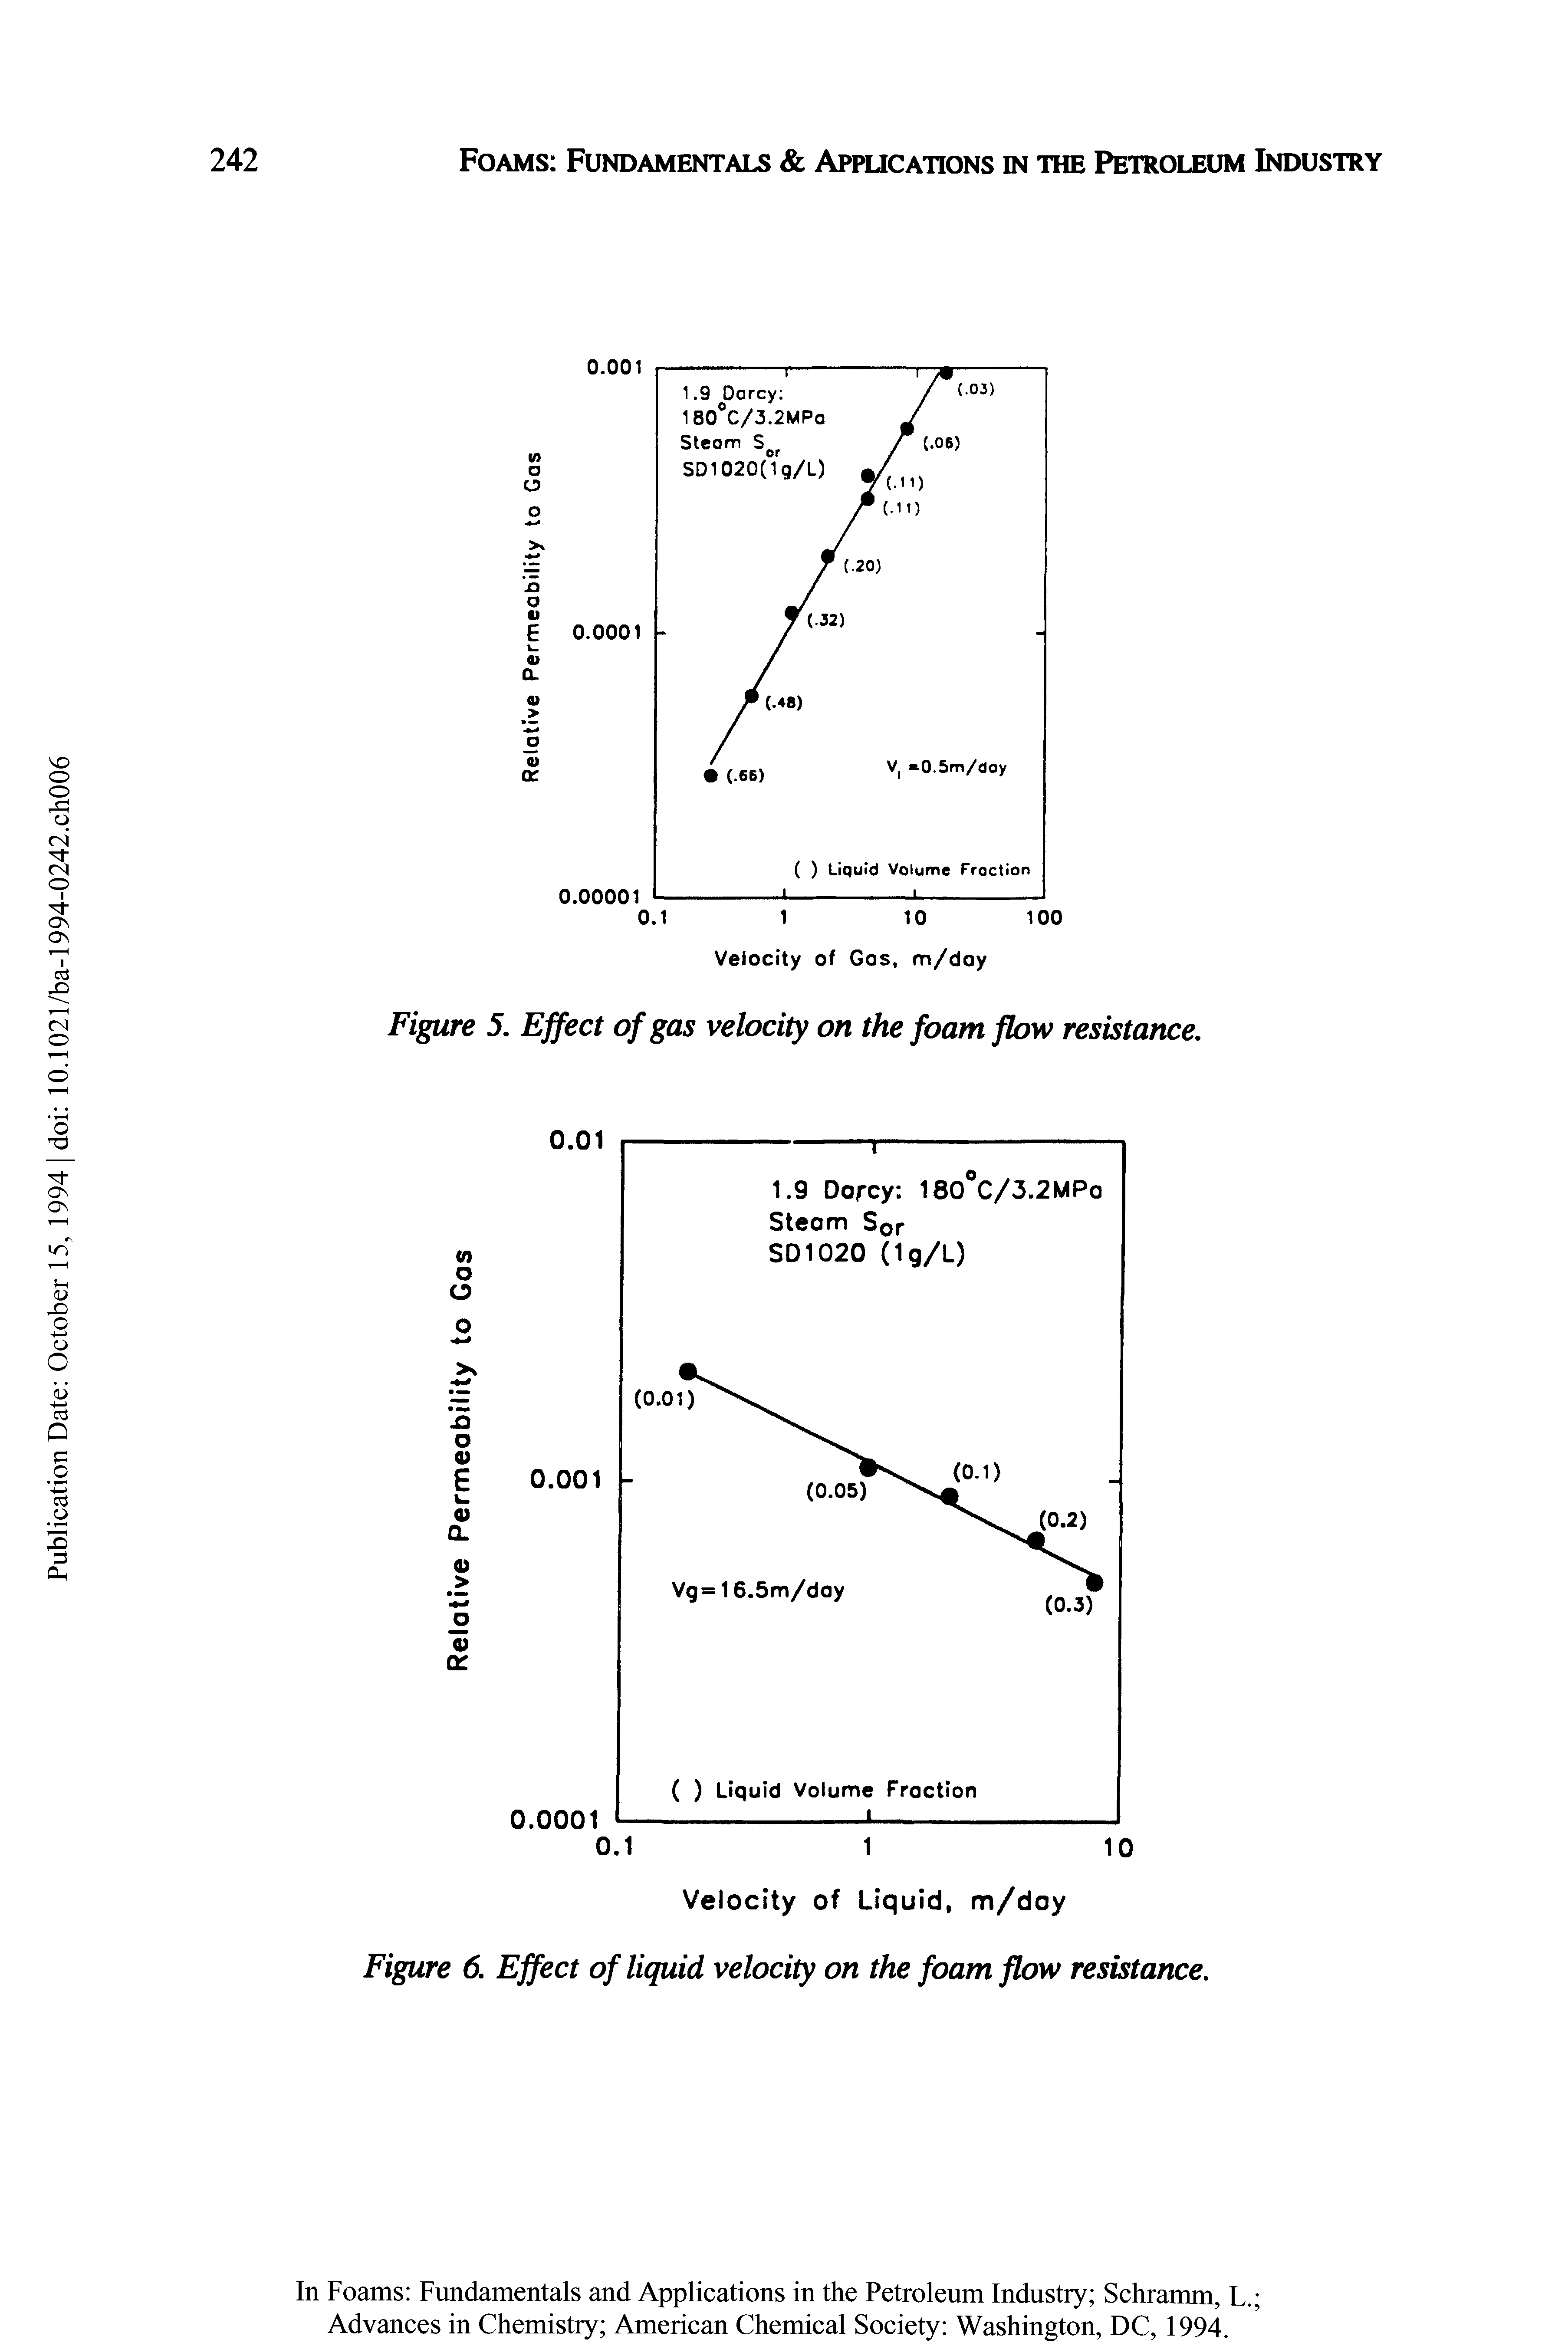 Figure 6. Effect of liquid velocity on the foam flow resistance.